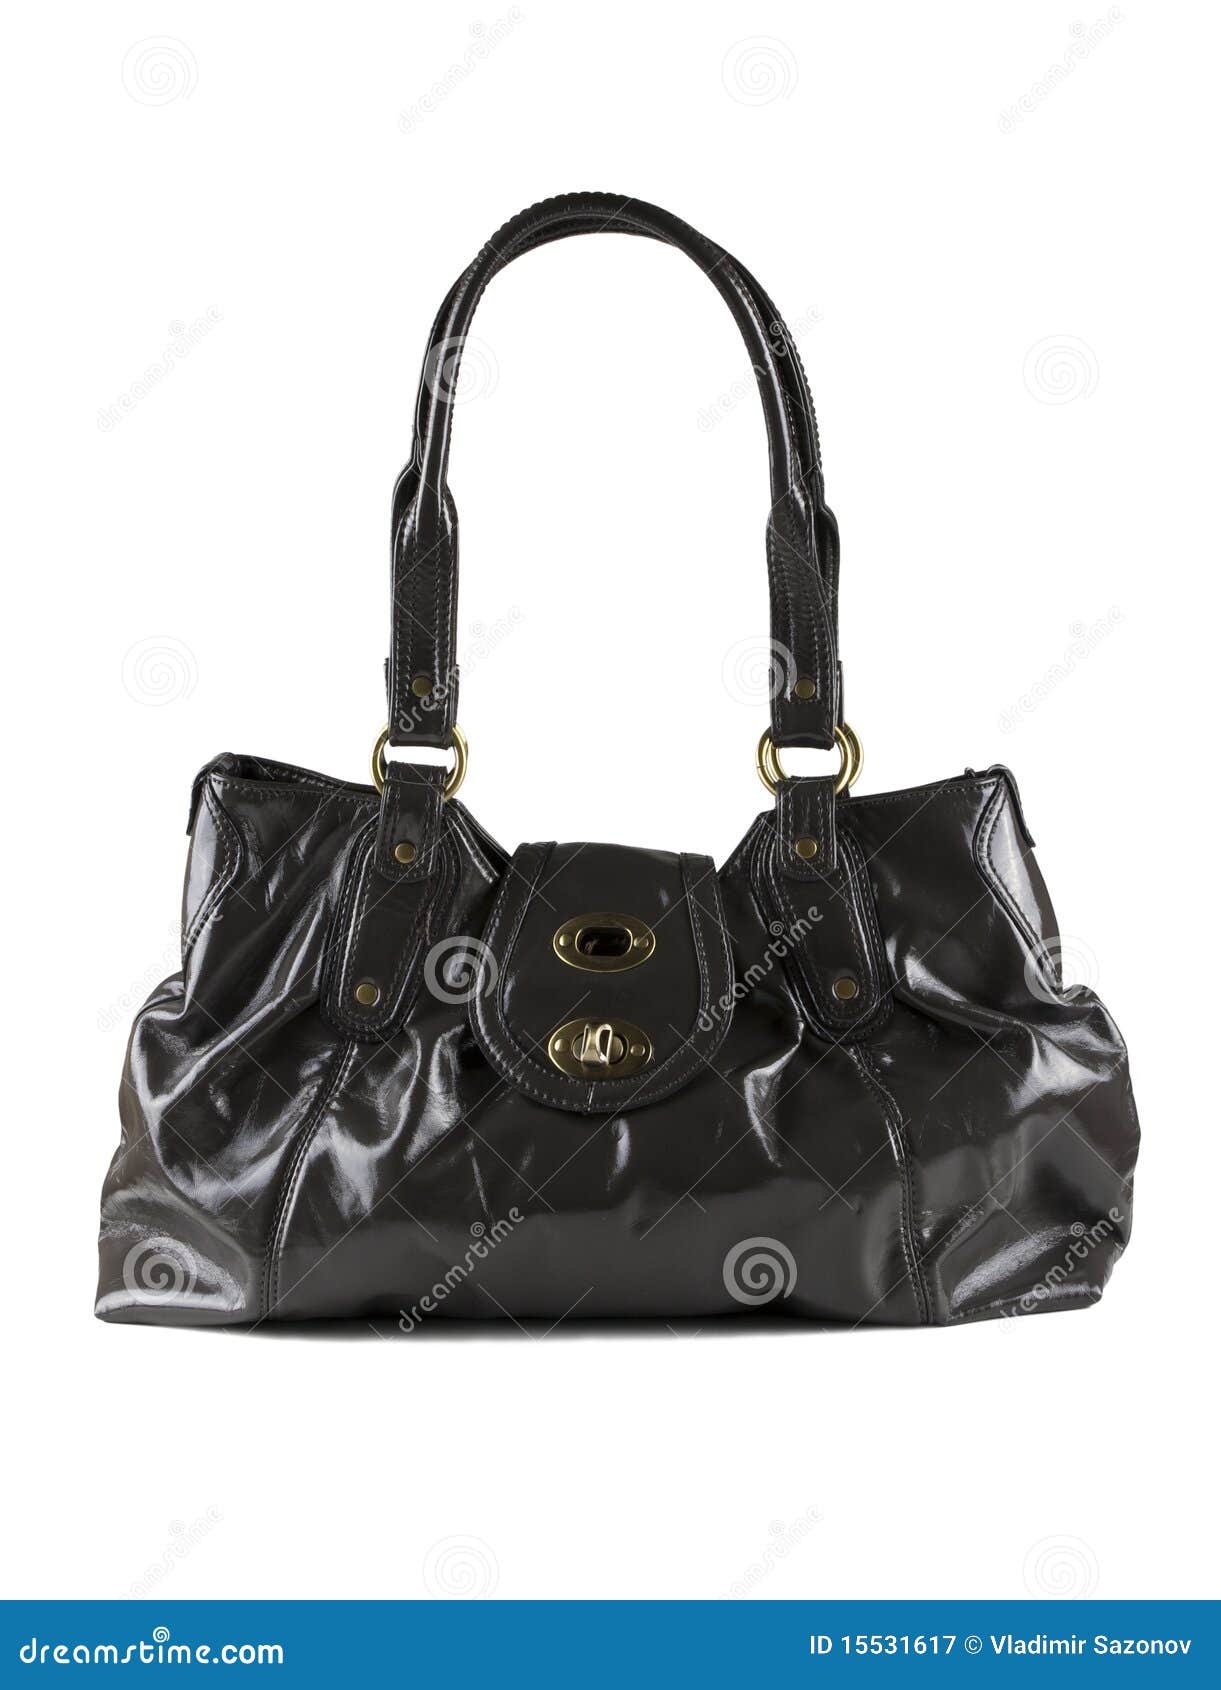 Woman s handbag stock image. Image of women, store, feminine - 15531617